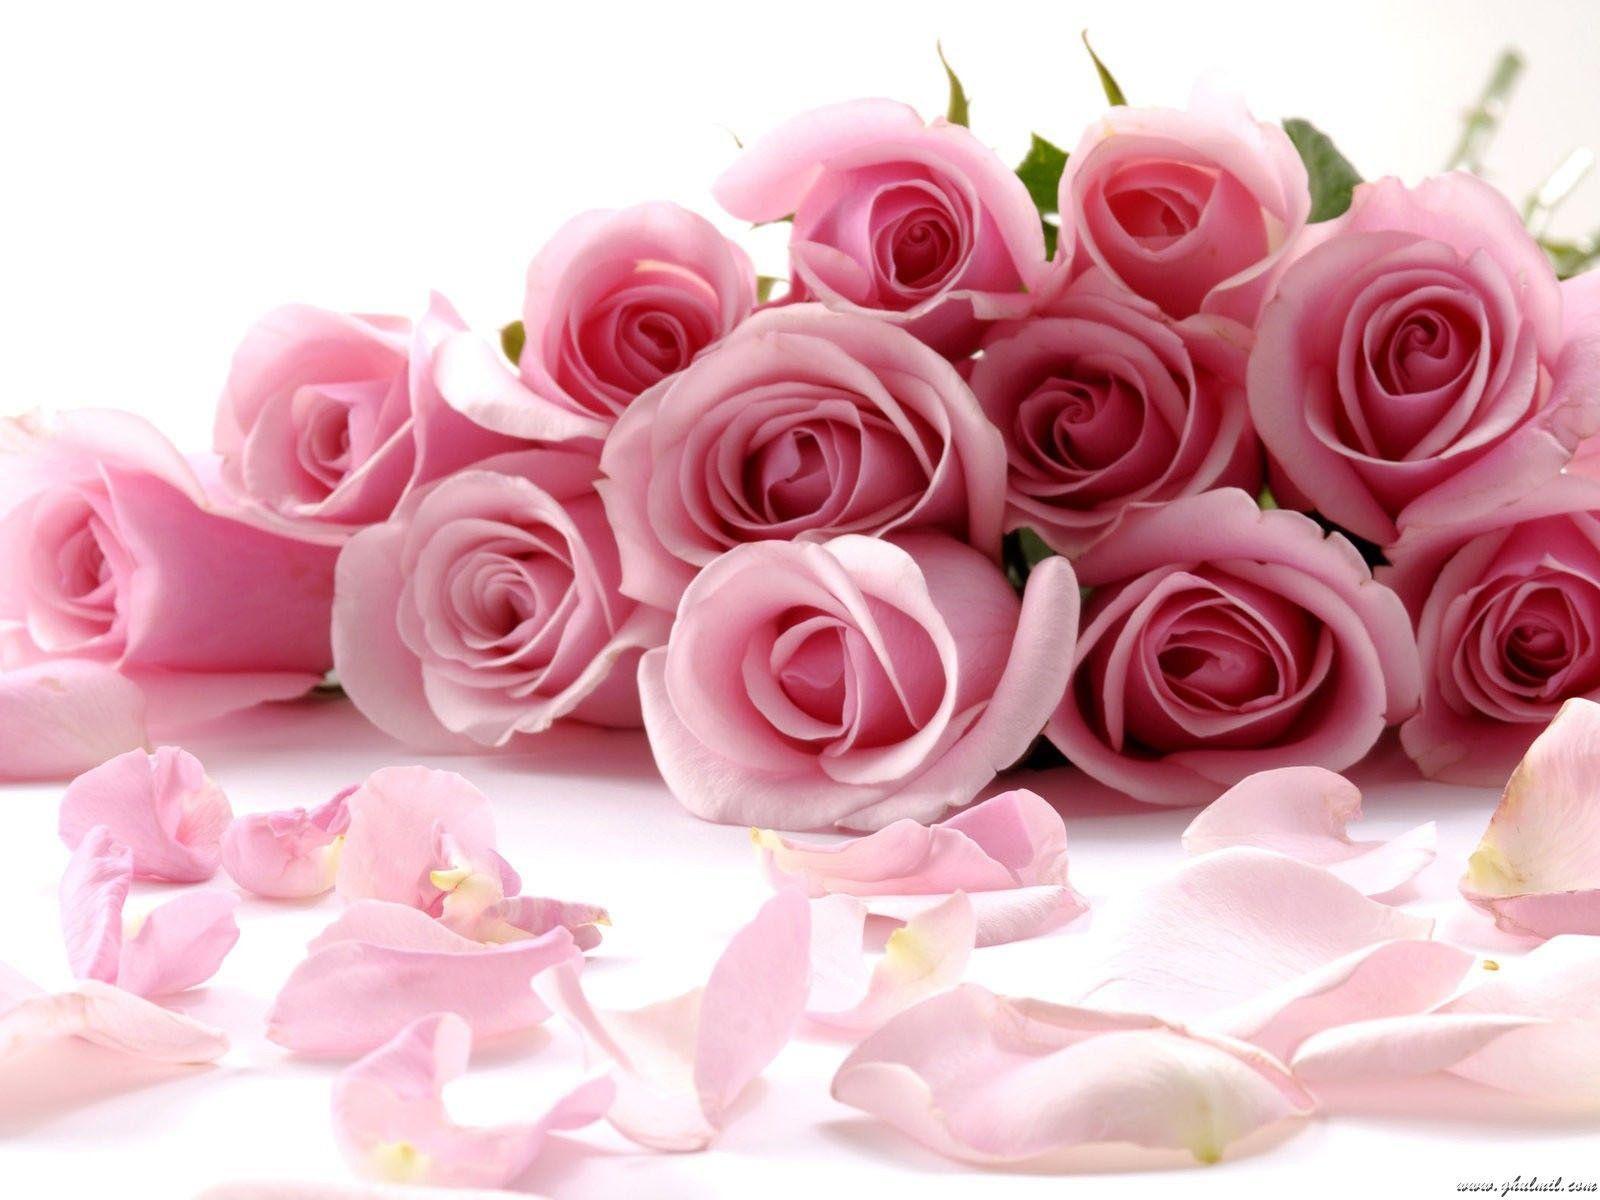 Beautiful pink roses picture Wallpaper Designs